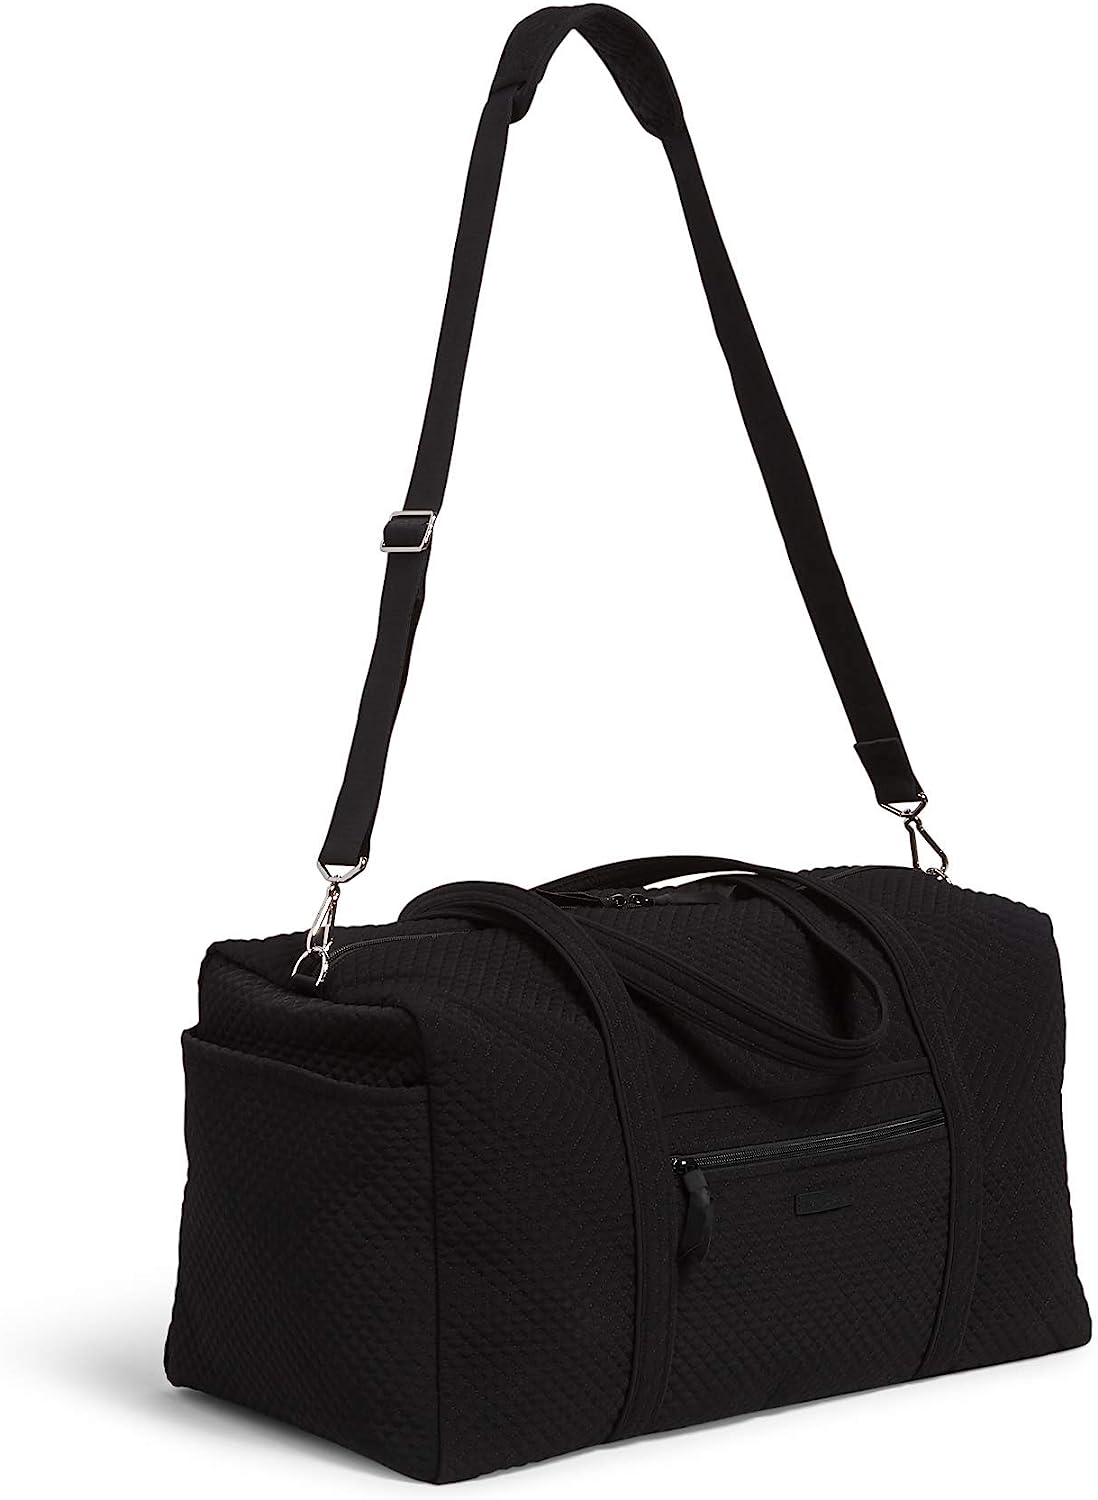 Women's Microfiber Large Travel Duffle Bag